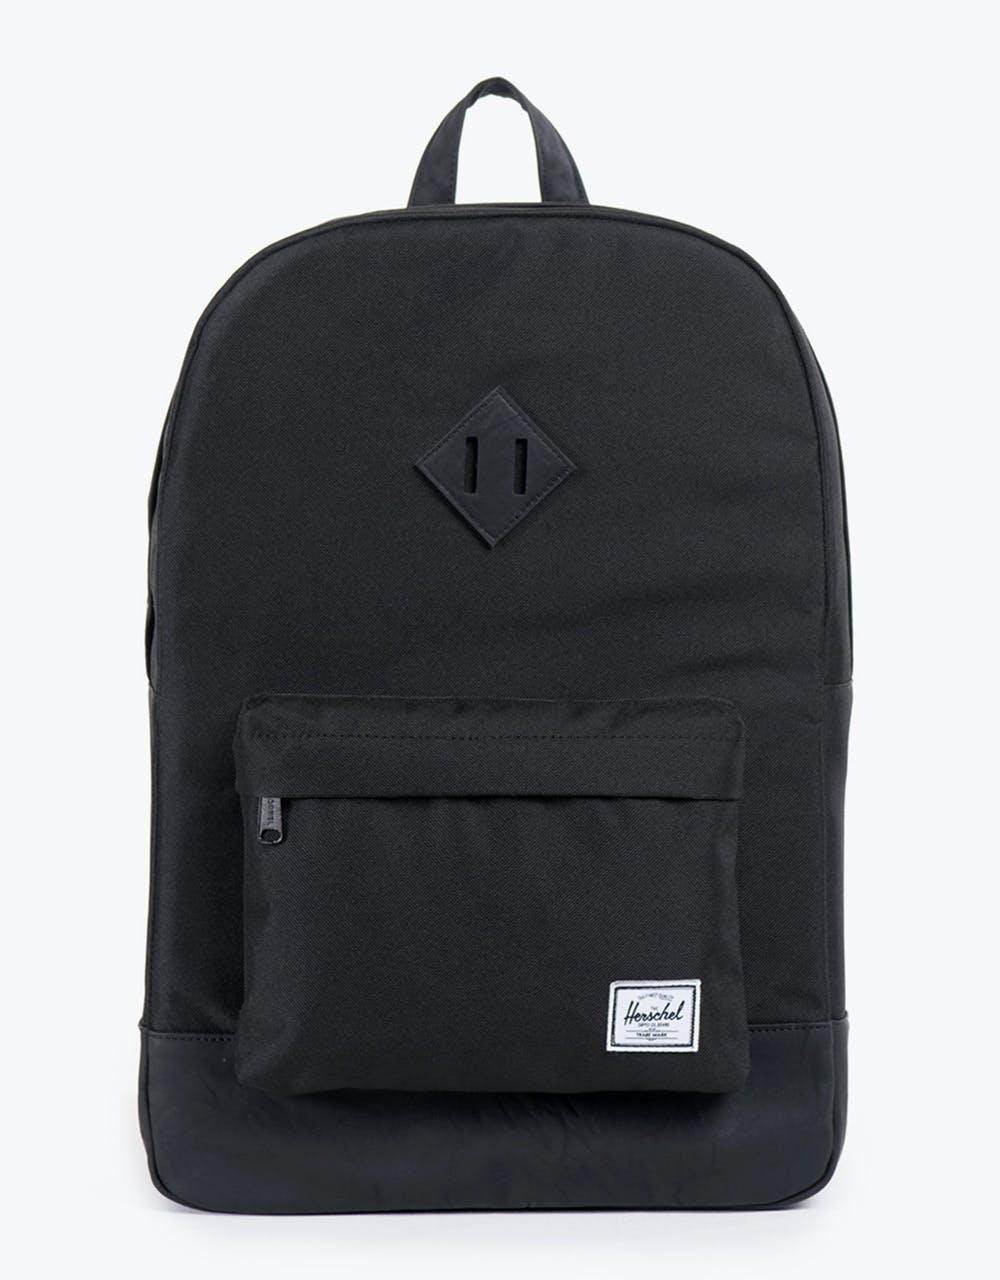 Herschel Supply Co. Heritage Backpack - Black/Black